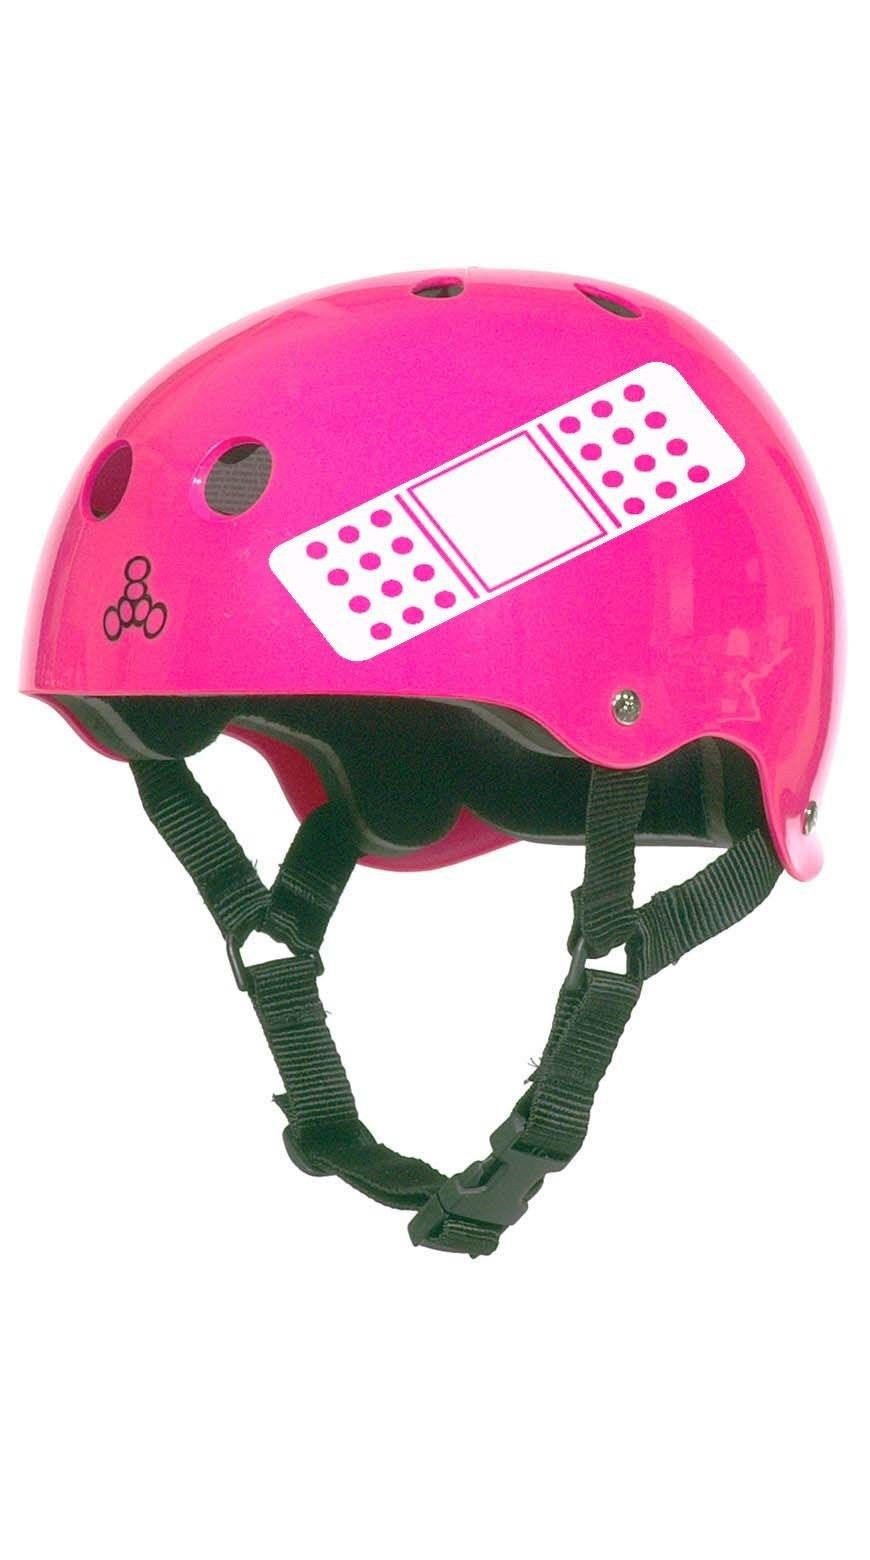 Roller Derby Band Aid Helmet Vinyl Sticker And 50 Similar Items